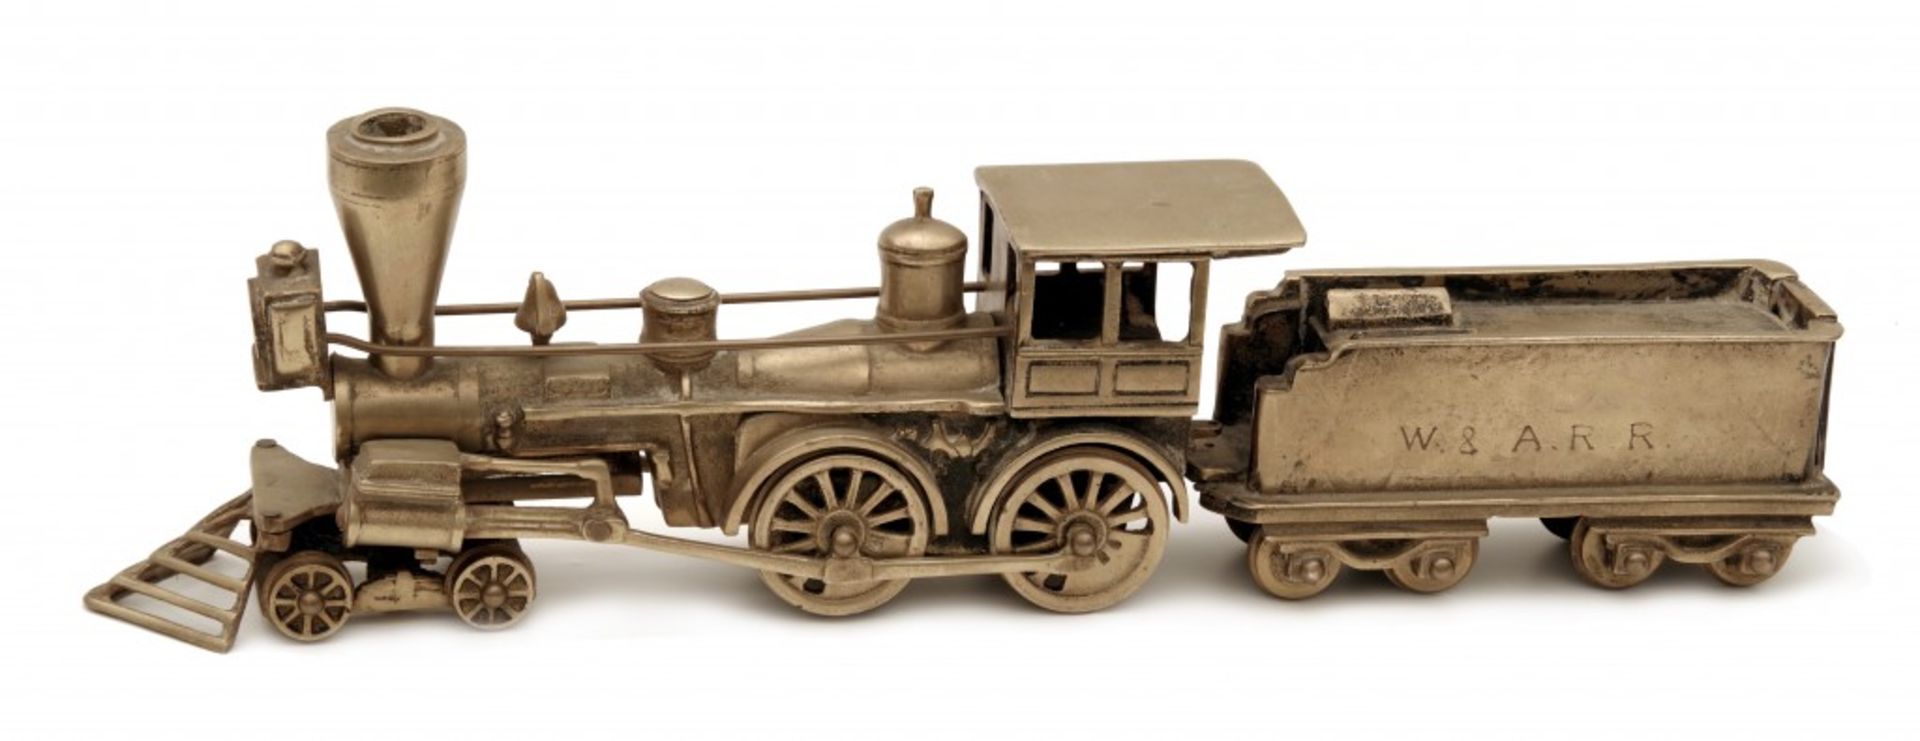 The General Locomotive & Tender